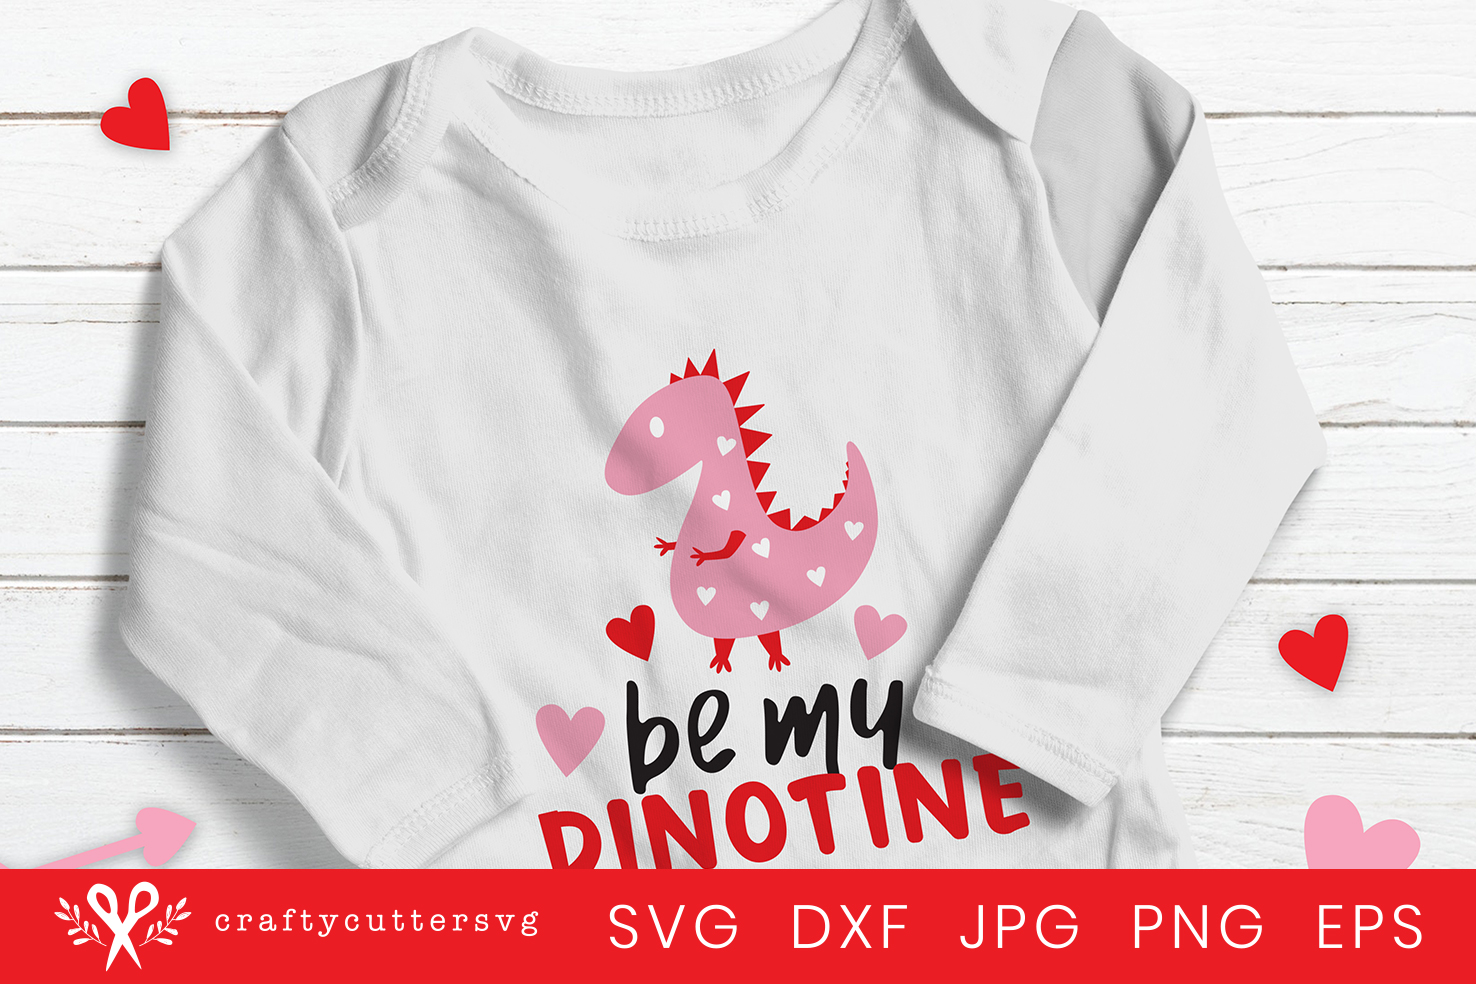 Download Be my Dinotine Svg Cute Kids Valentine's Day Shirt Cut File